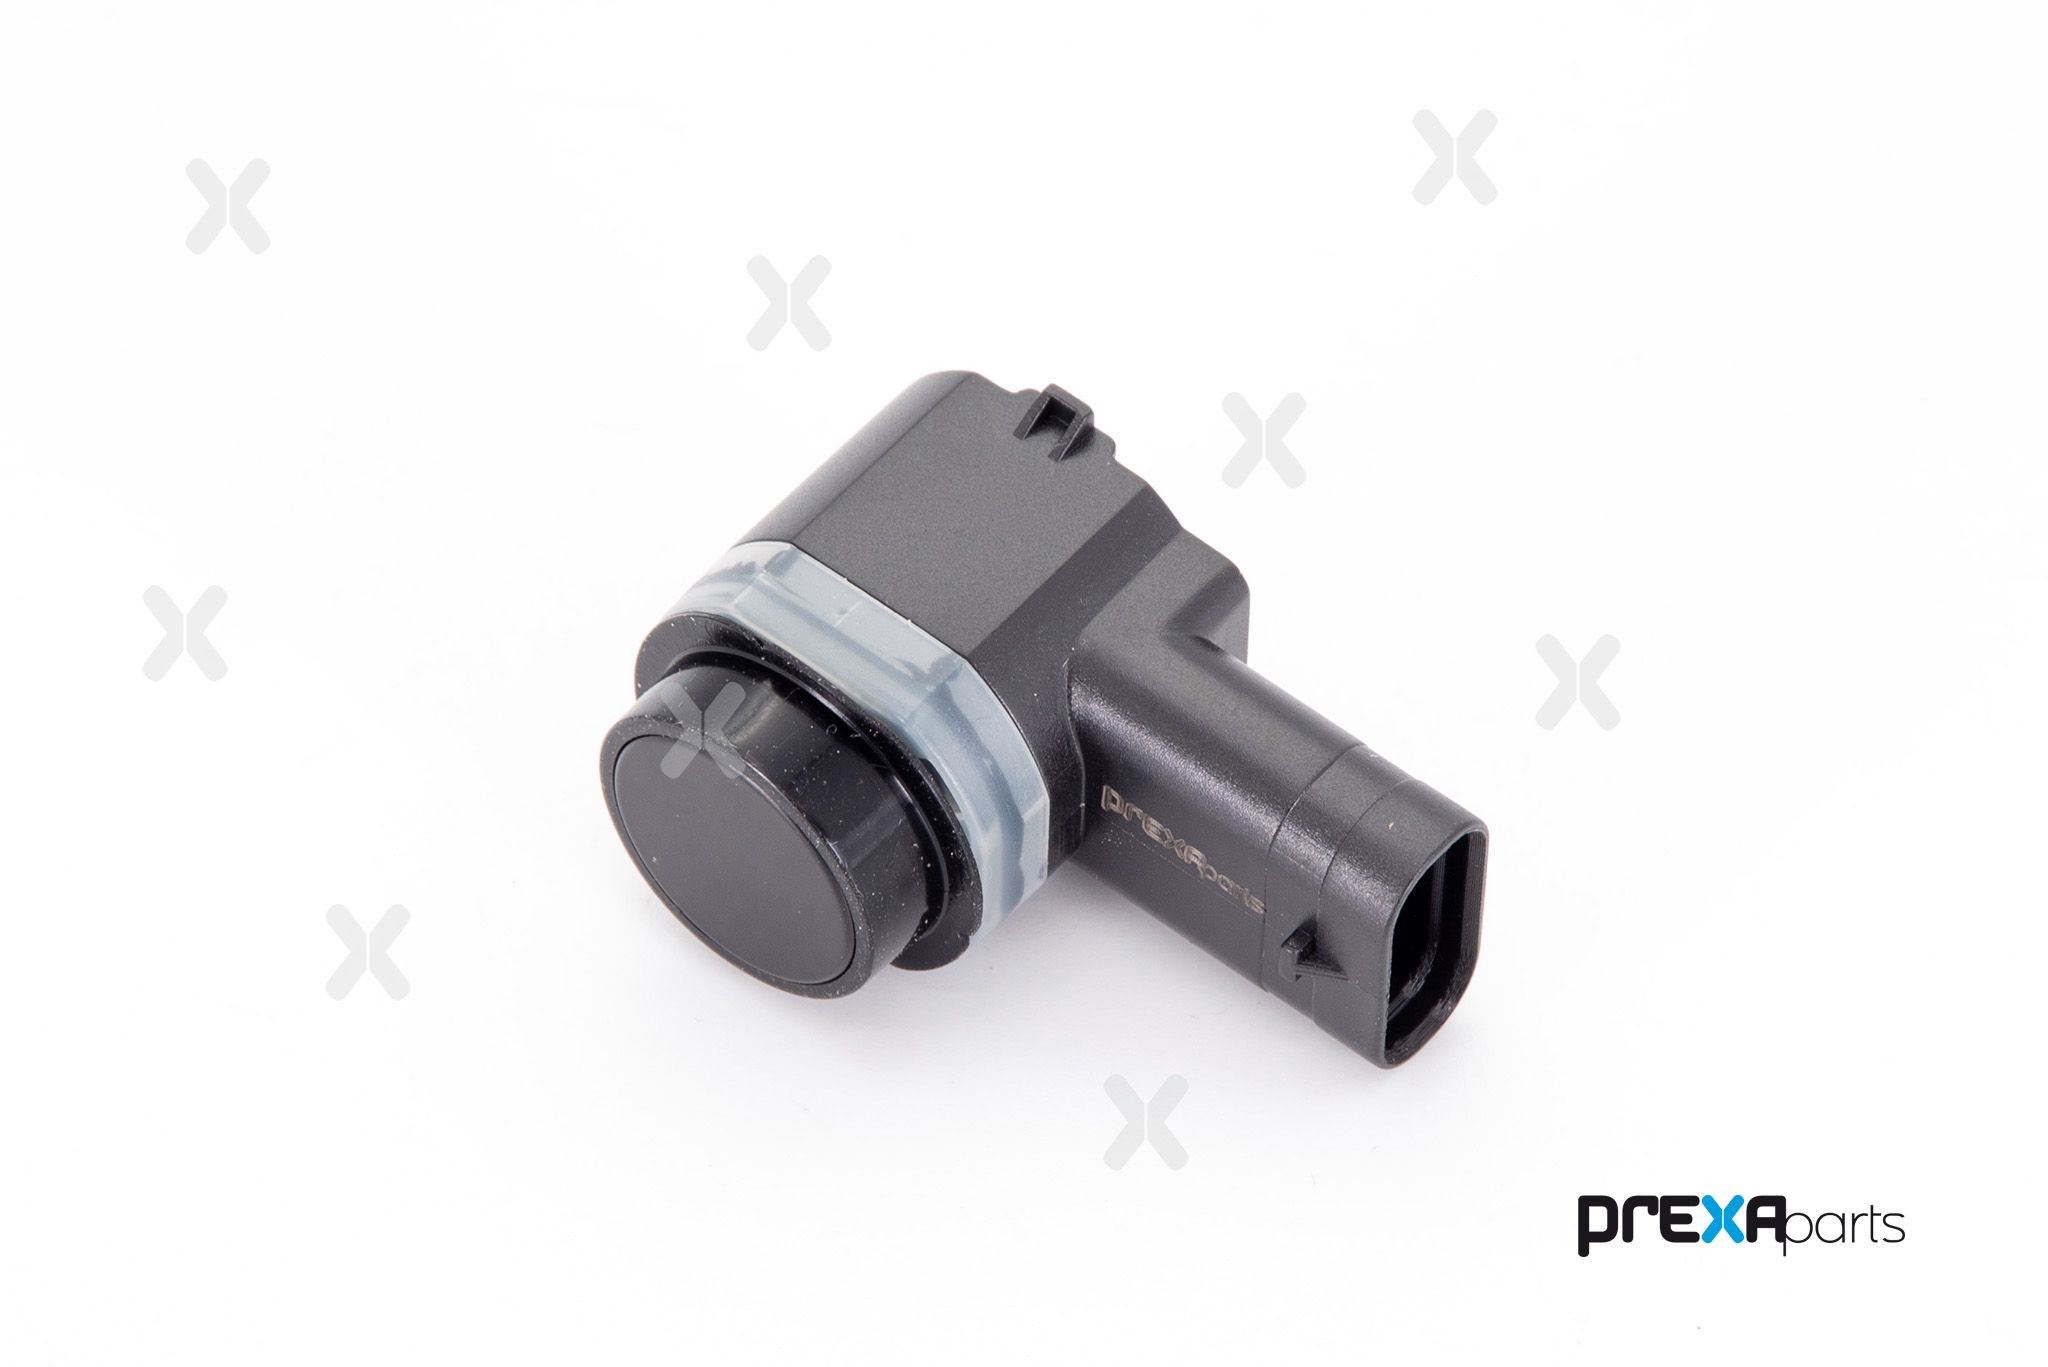 PREXAparts Ultrasonic Sensor Reversing sensors P503003 buy